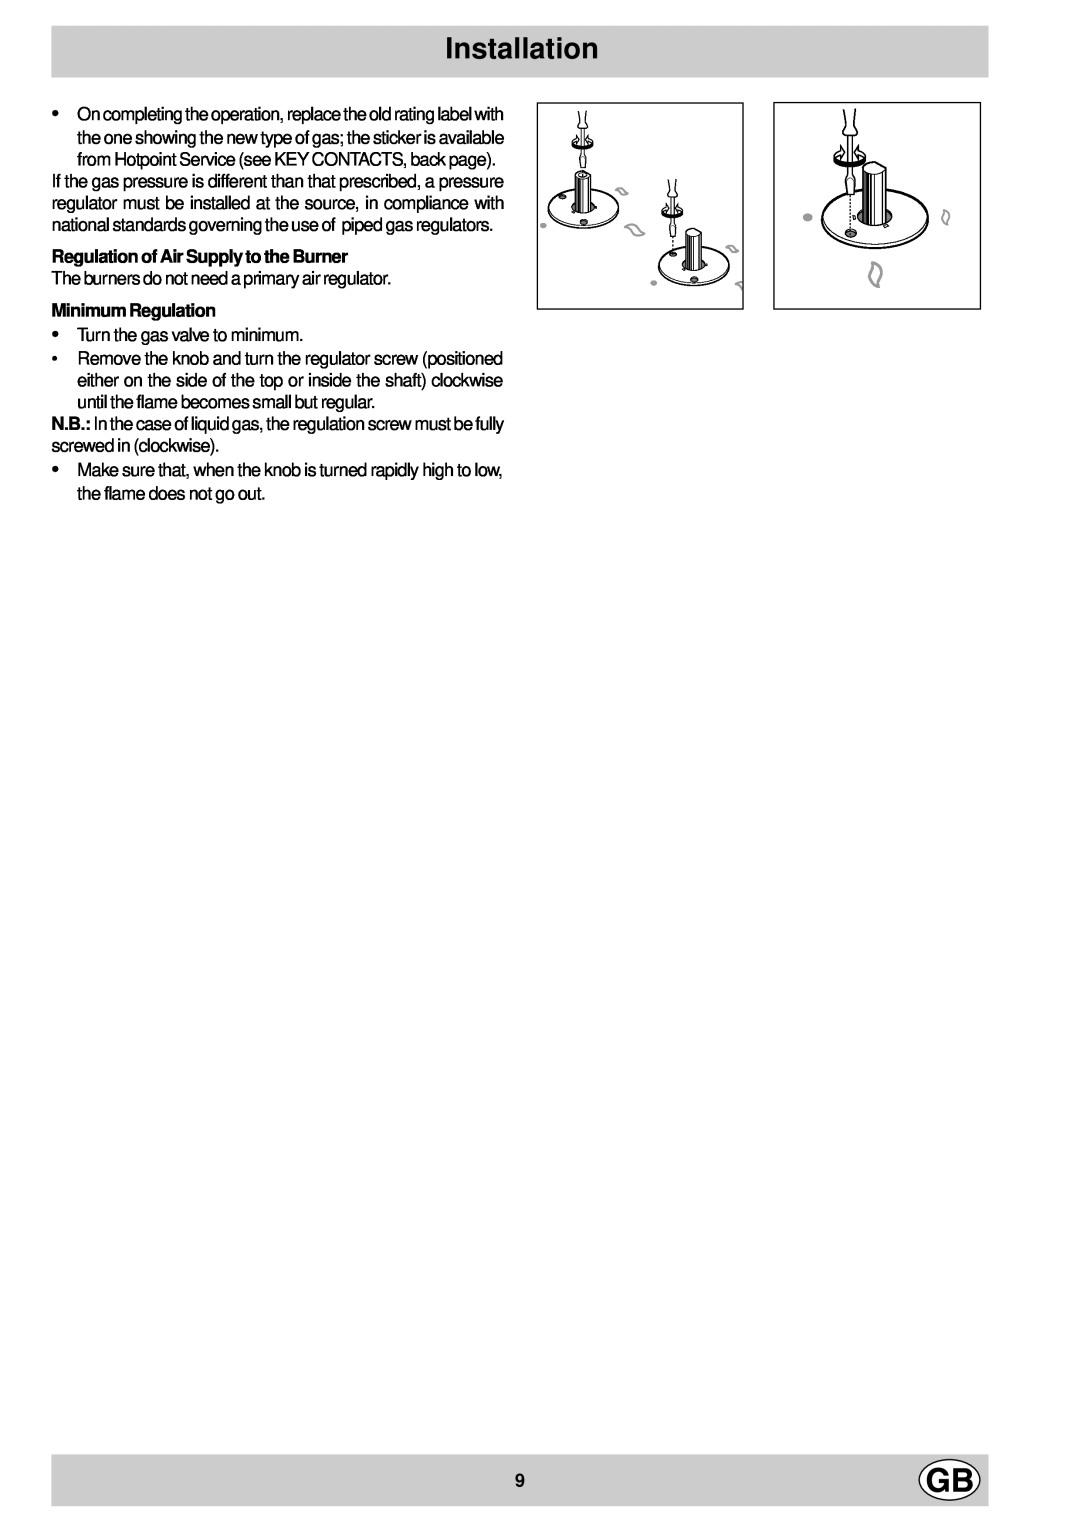 Hotpoint G740 manual Installation, Regulation of Air Supply to the Burner, Minimum Regulation 